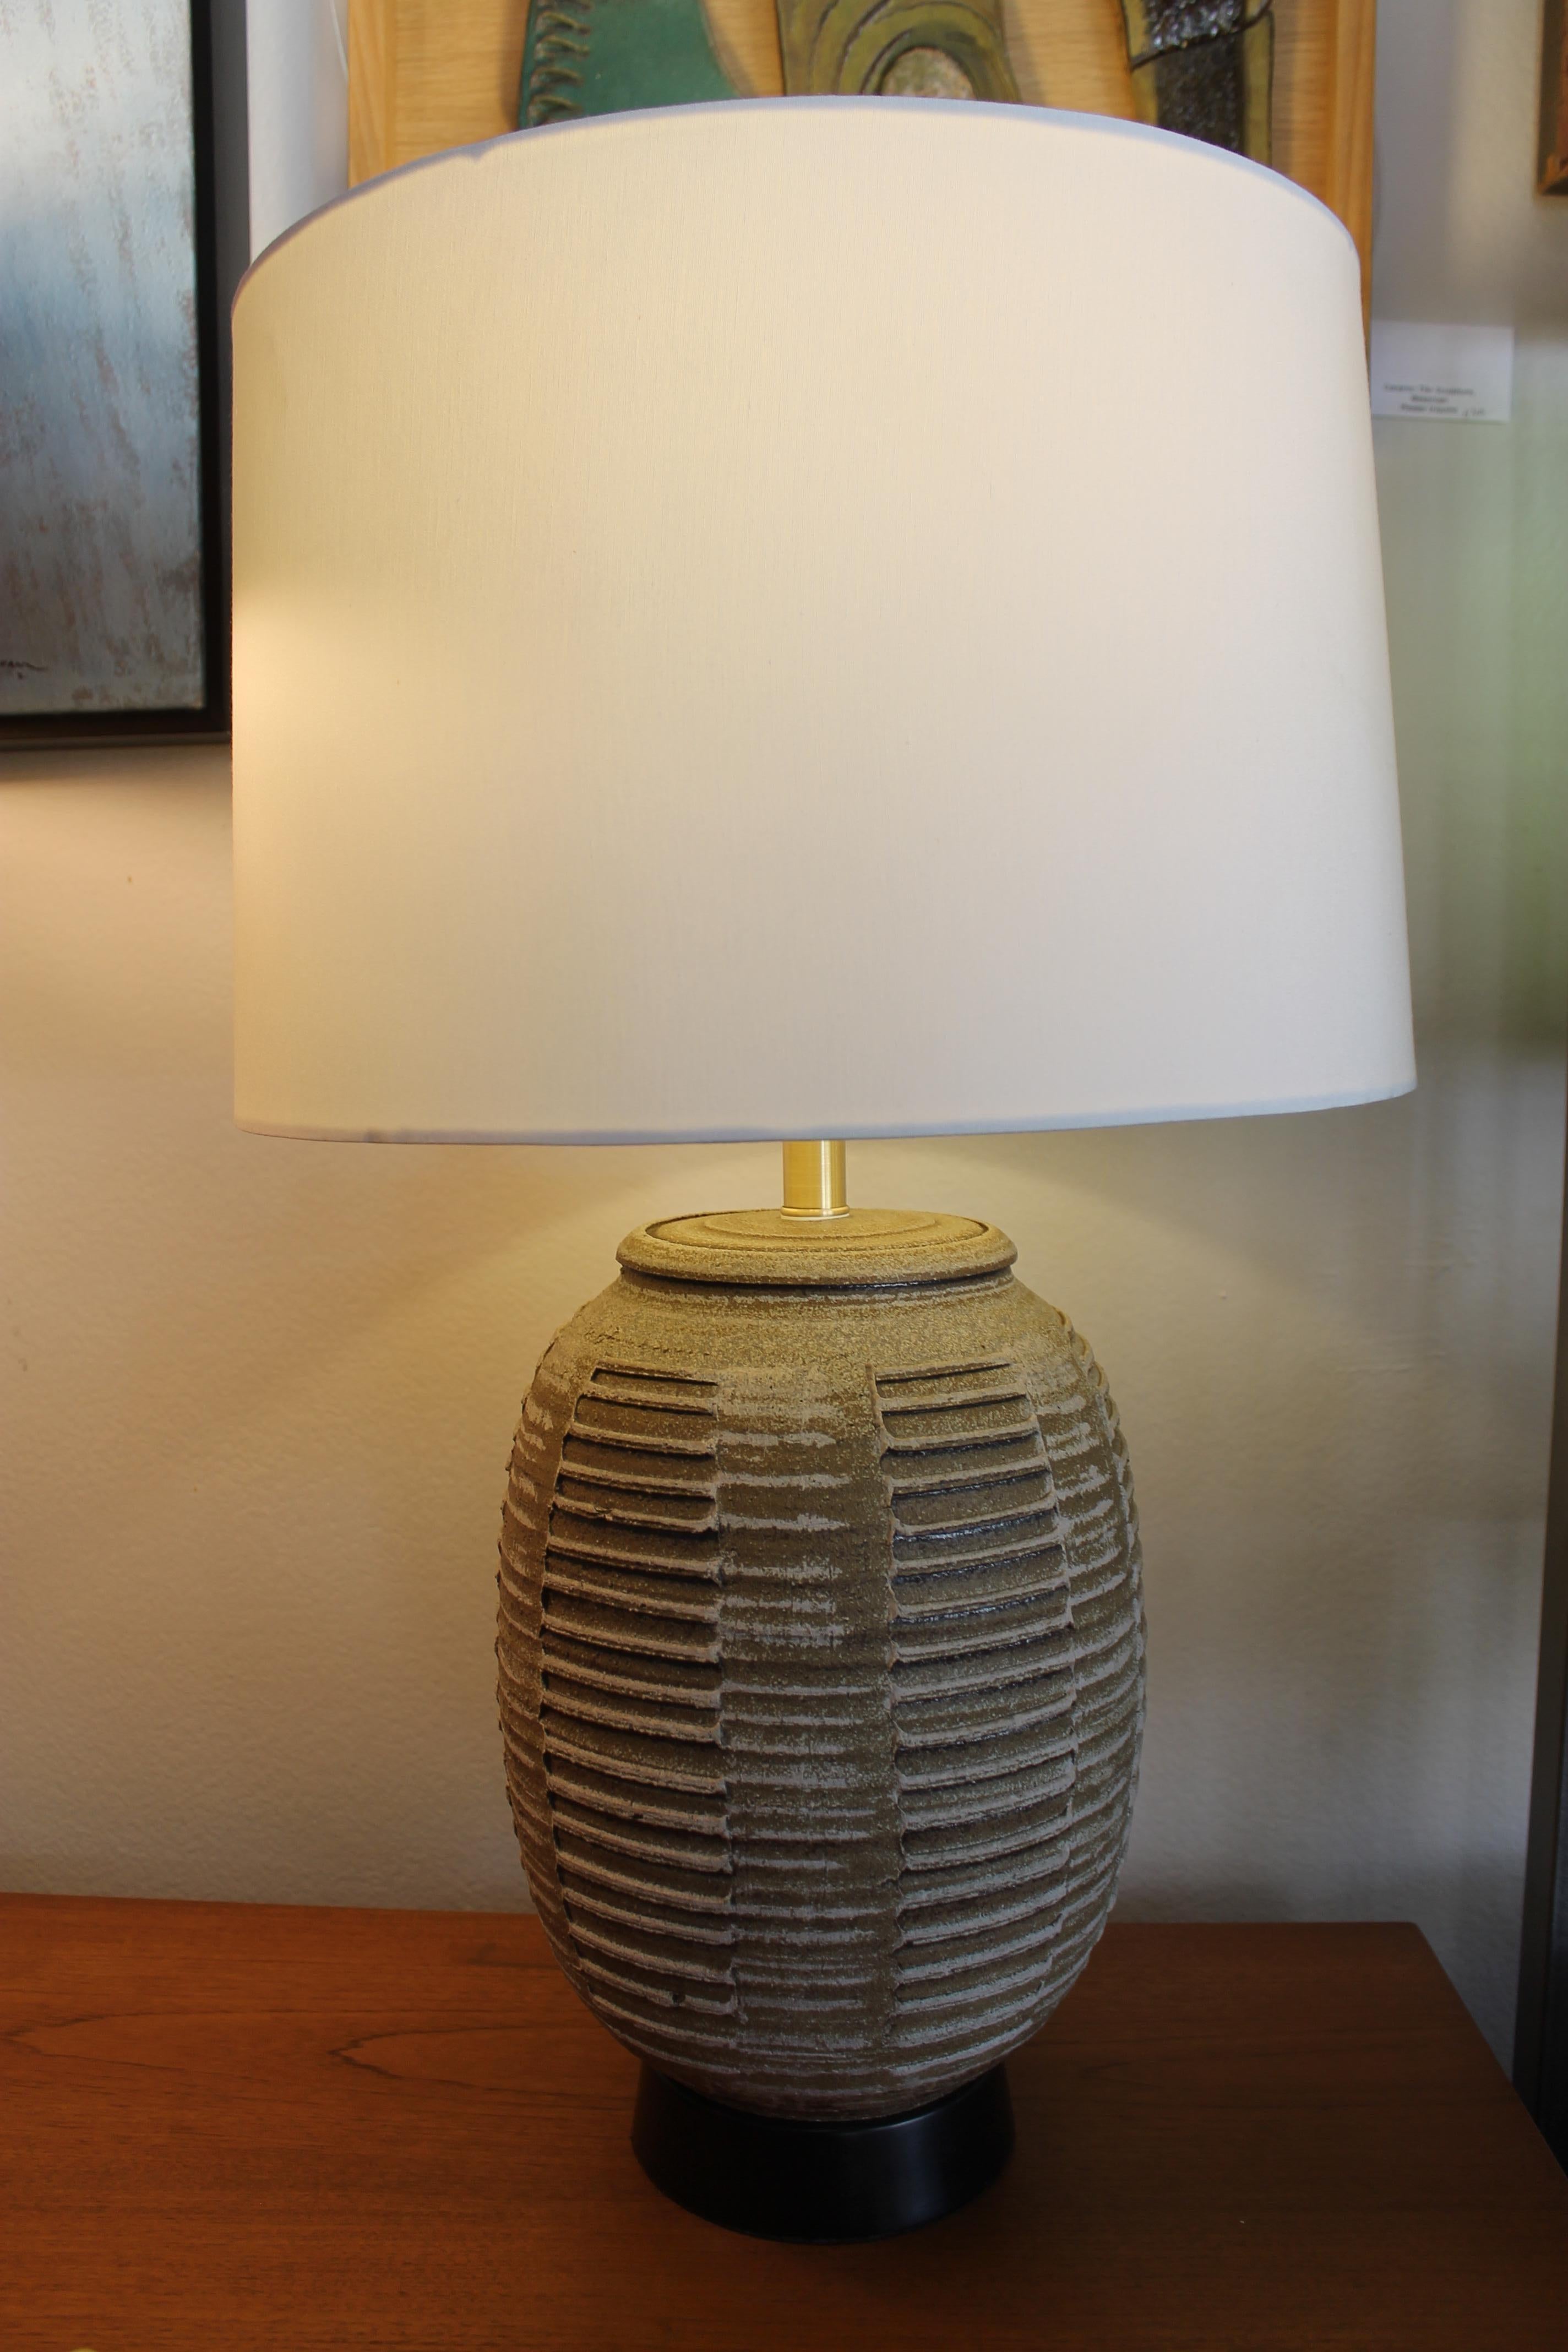 Ceramic lamp by Bob Kinzie. Ceramic portion is 14